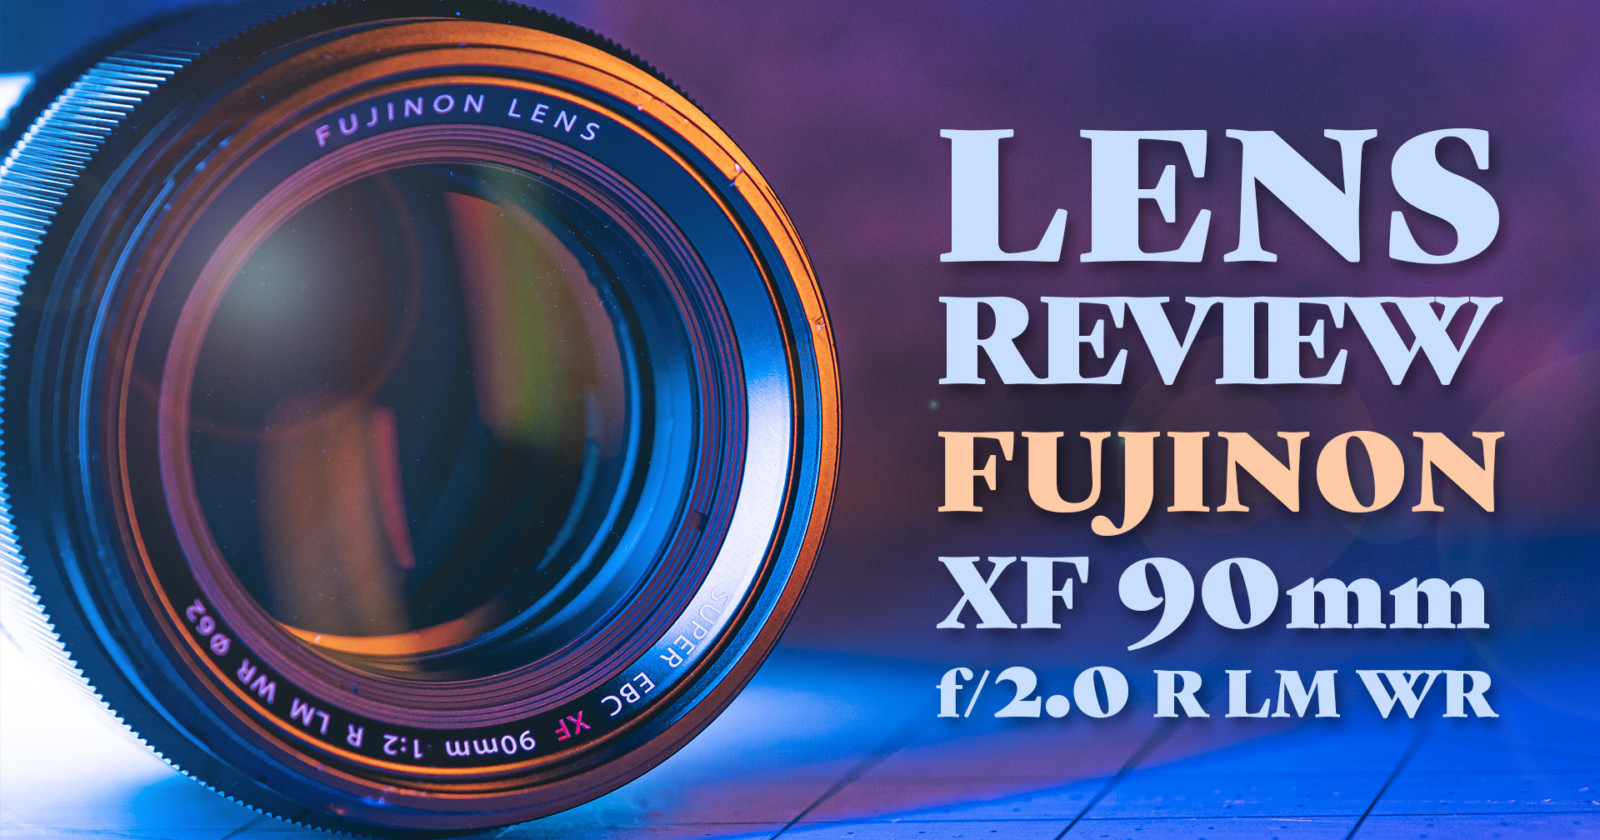  review fujifilm 90mm lens 